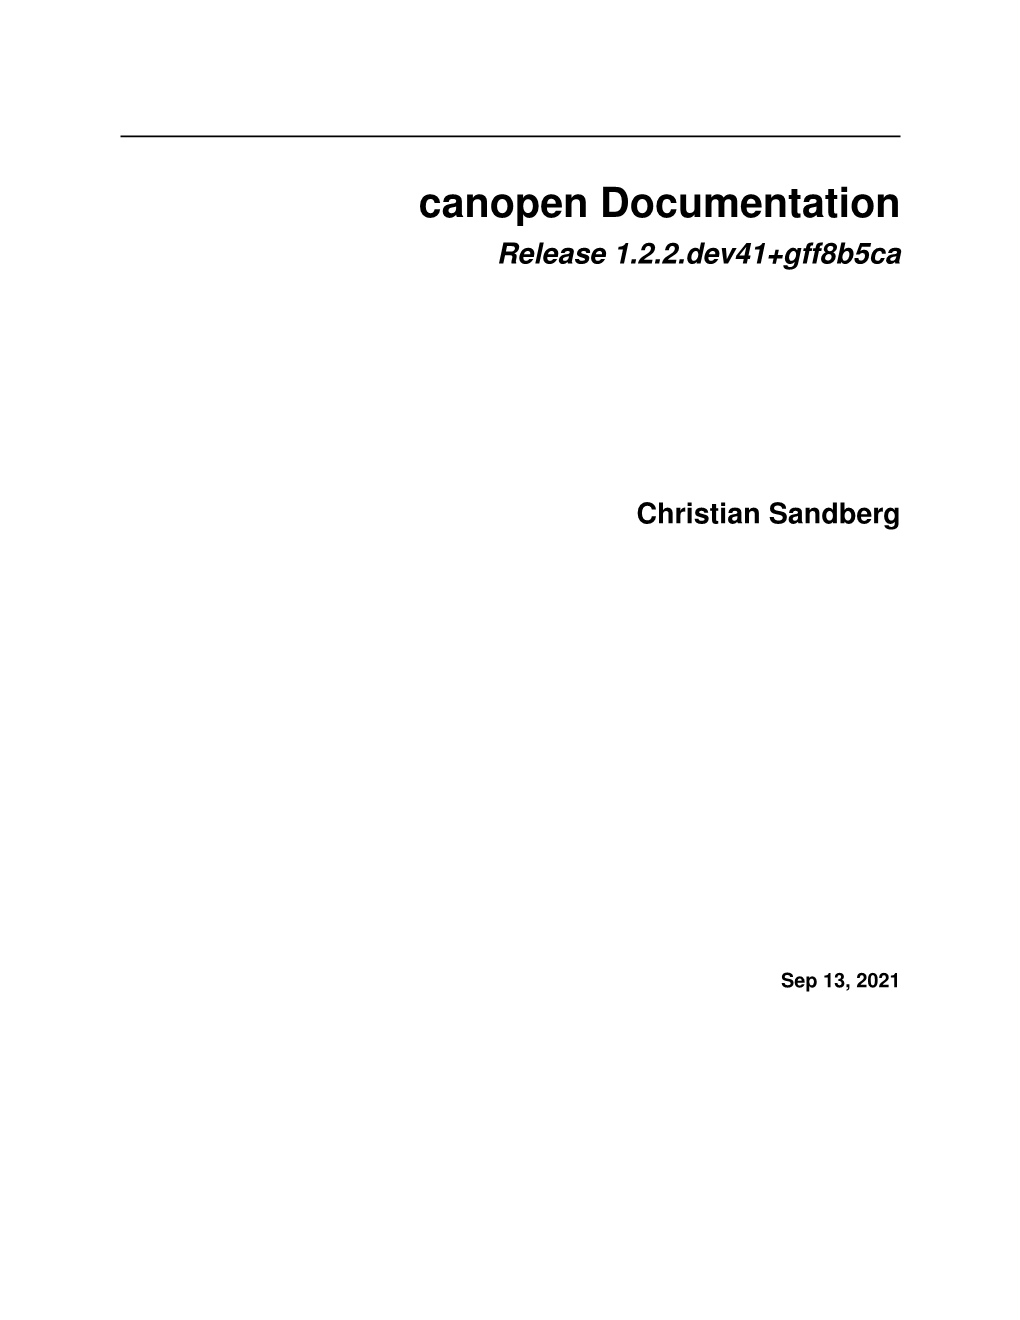 Canopen Documentation Release 1.2.2.Dev41+Gff8b5ca